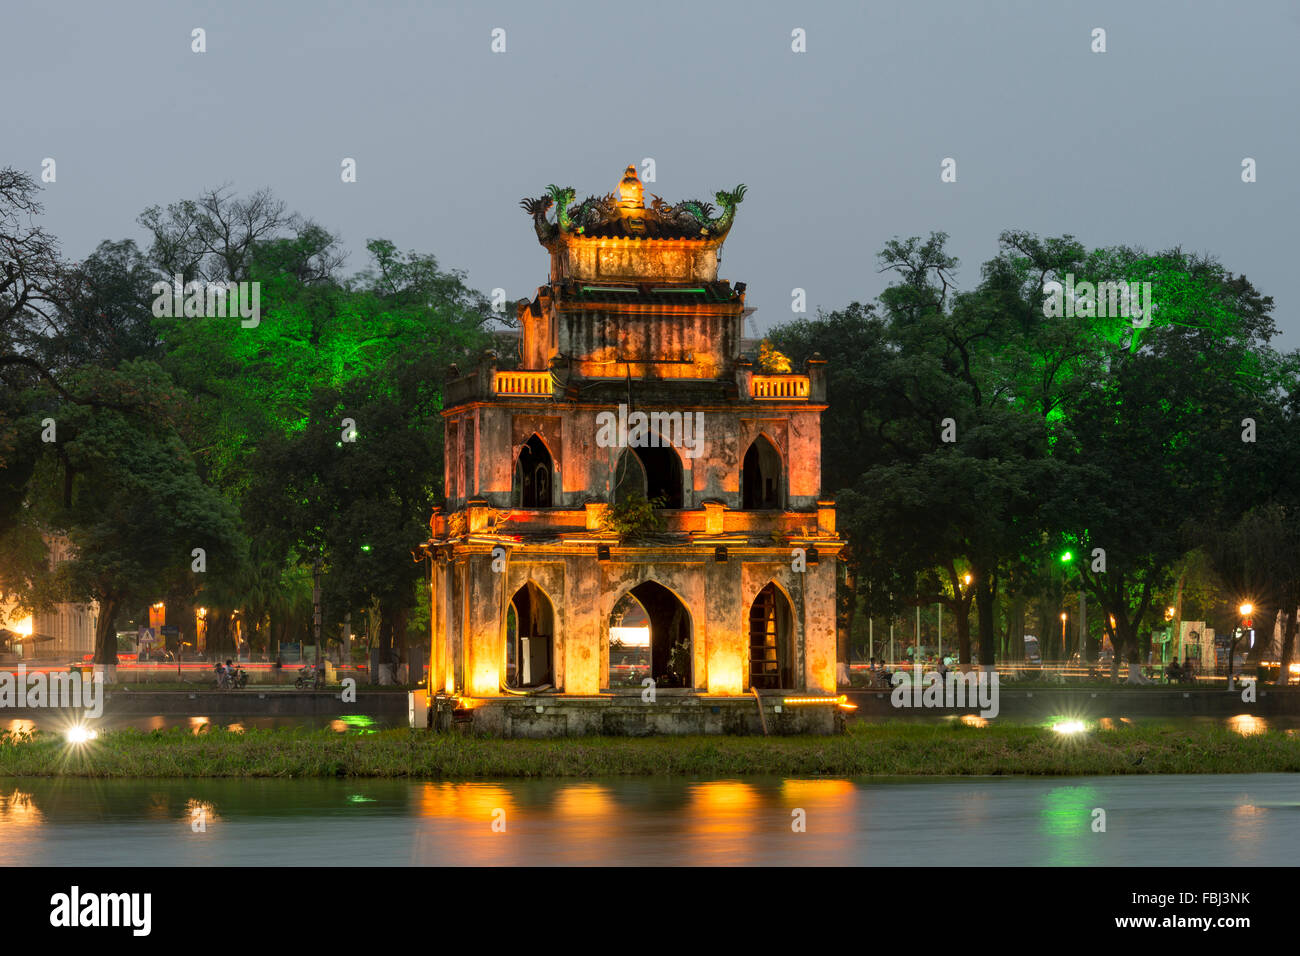 Thap Rua (Turtle Tower) lit up in Hoam Kien Lake, Hanoi, Vietnam Stock Photo